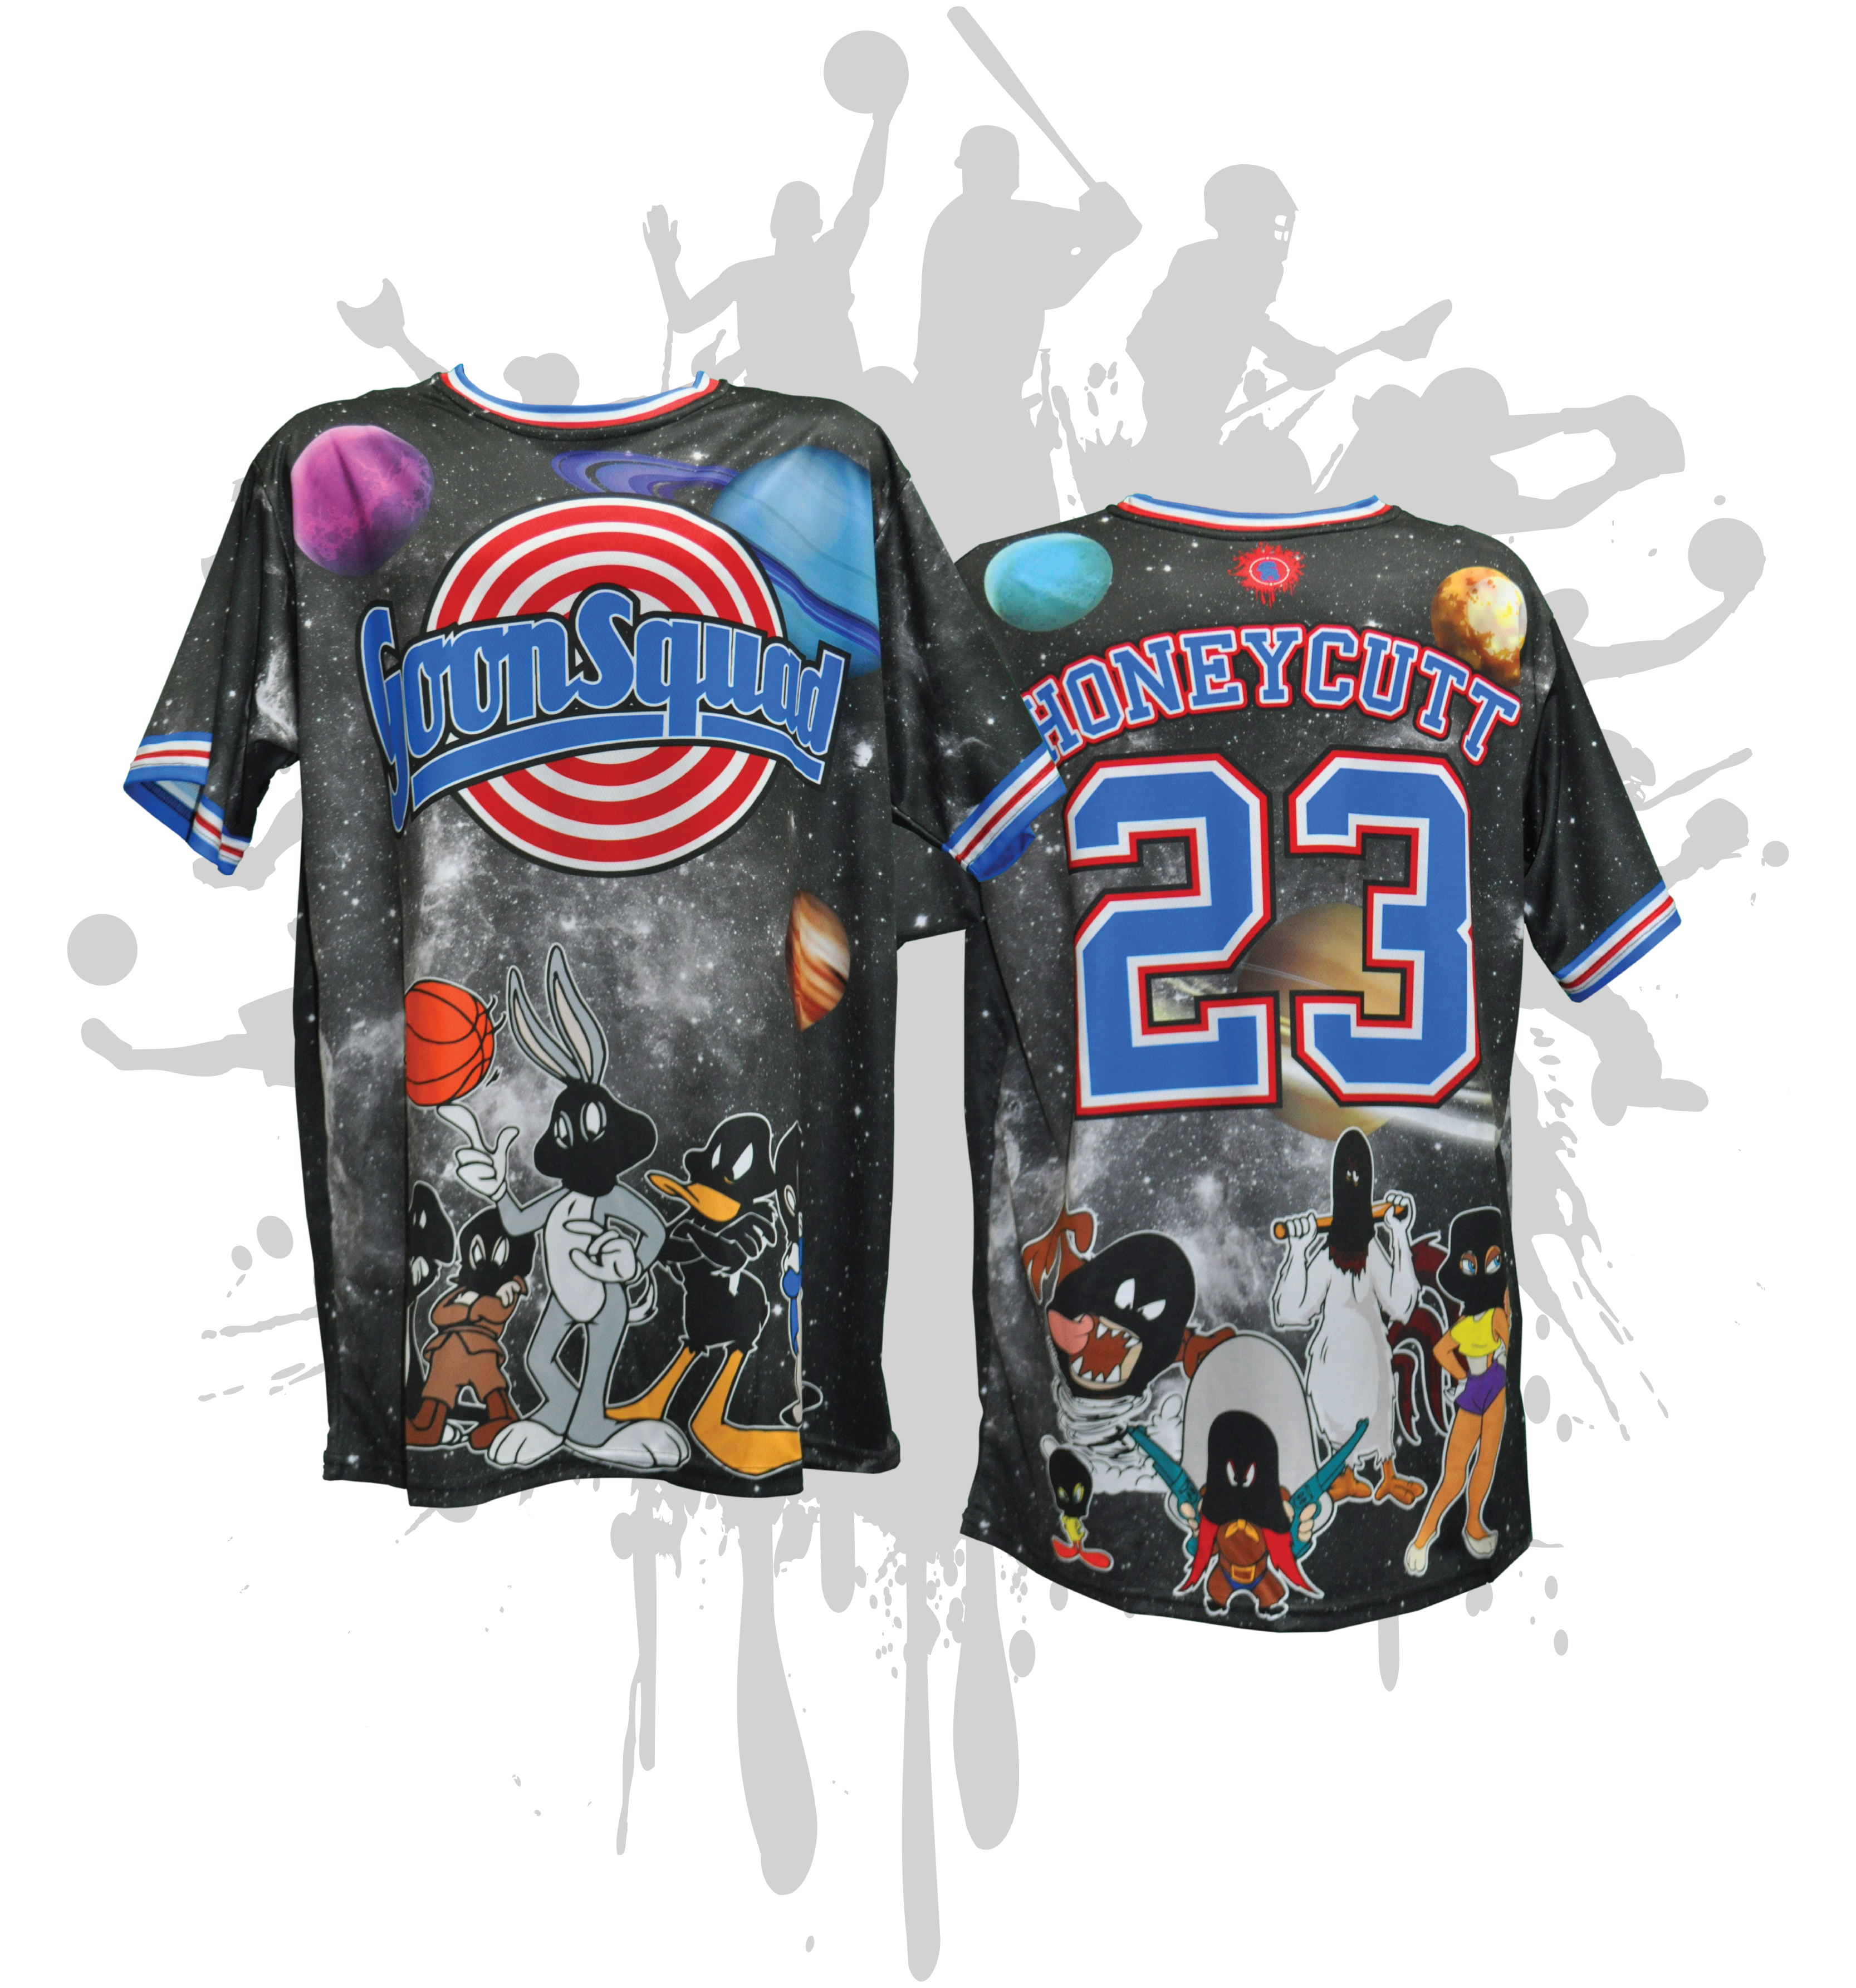 custom baby baseball jerseys - full-dye baseball uniform